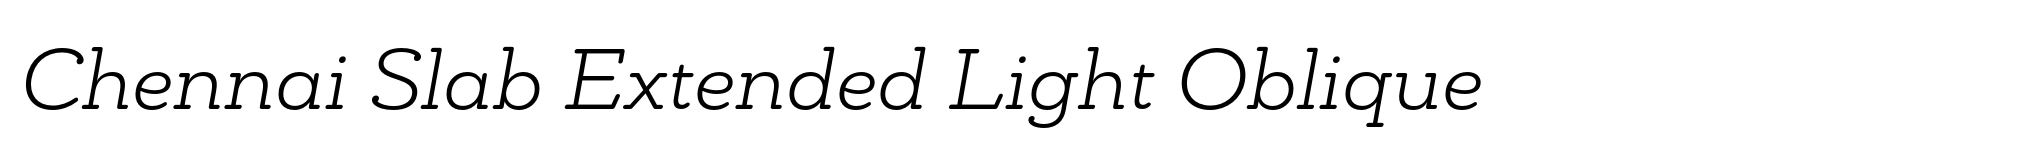 Chennai Slab Extended Light Oblique image